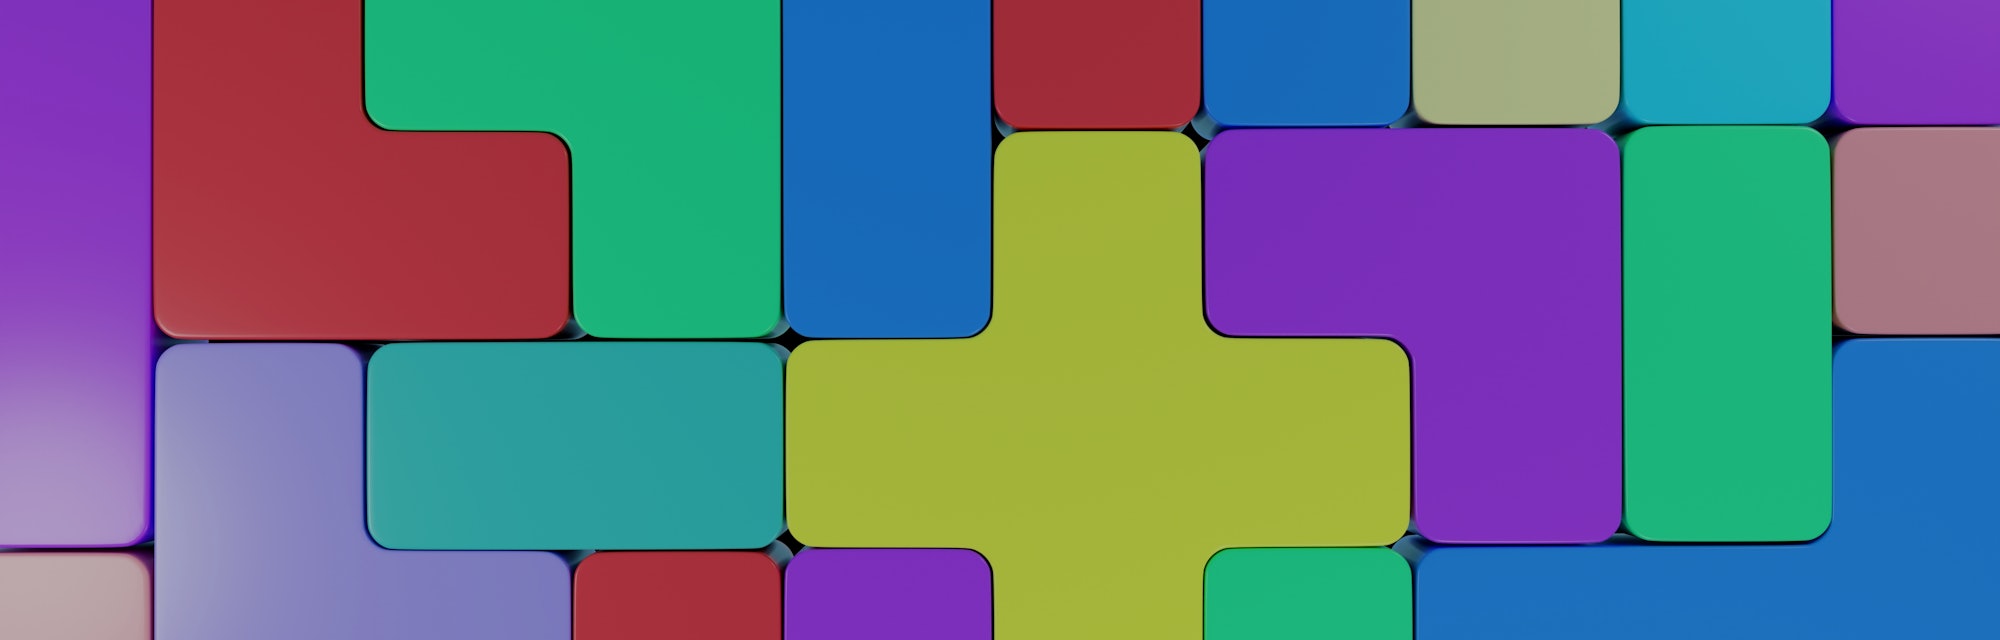 Colored wallpaper. Children's geometric wallpaper. Multi-colored cubes are located nearby. Tetris cu...